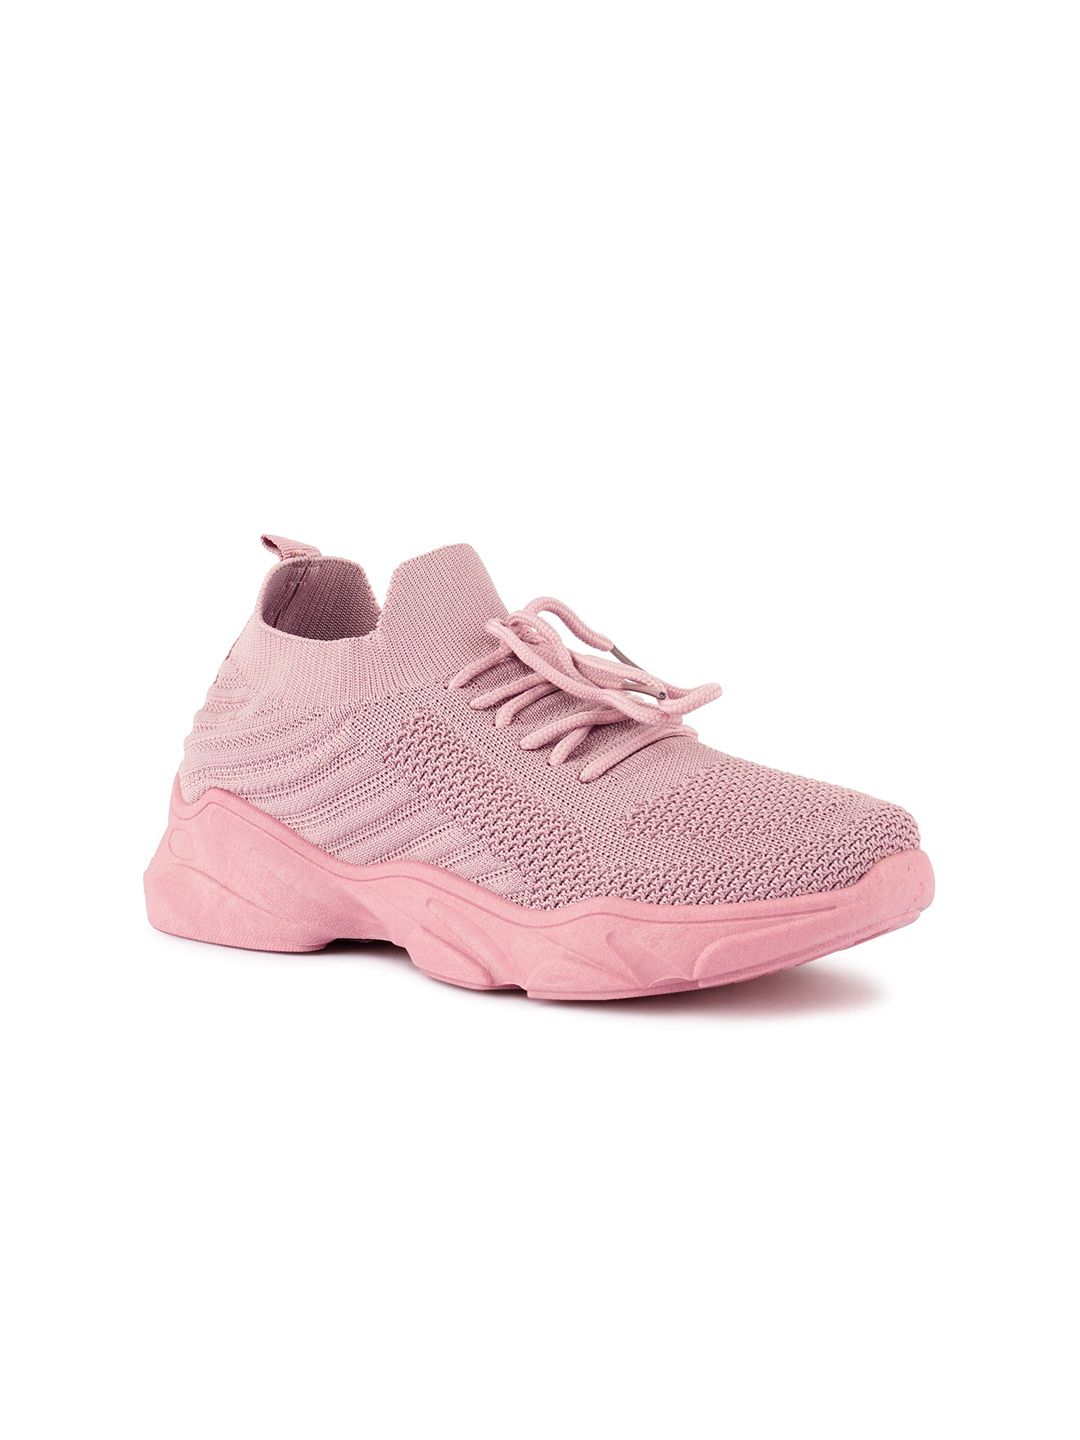 London Rag Women Pink Woven Design Sneakers Price in India